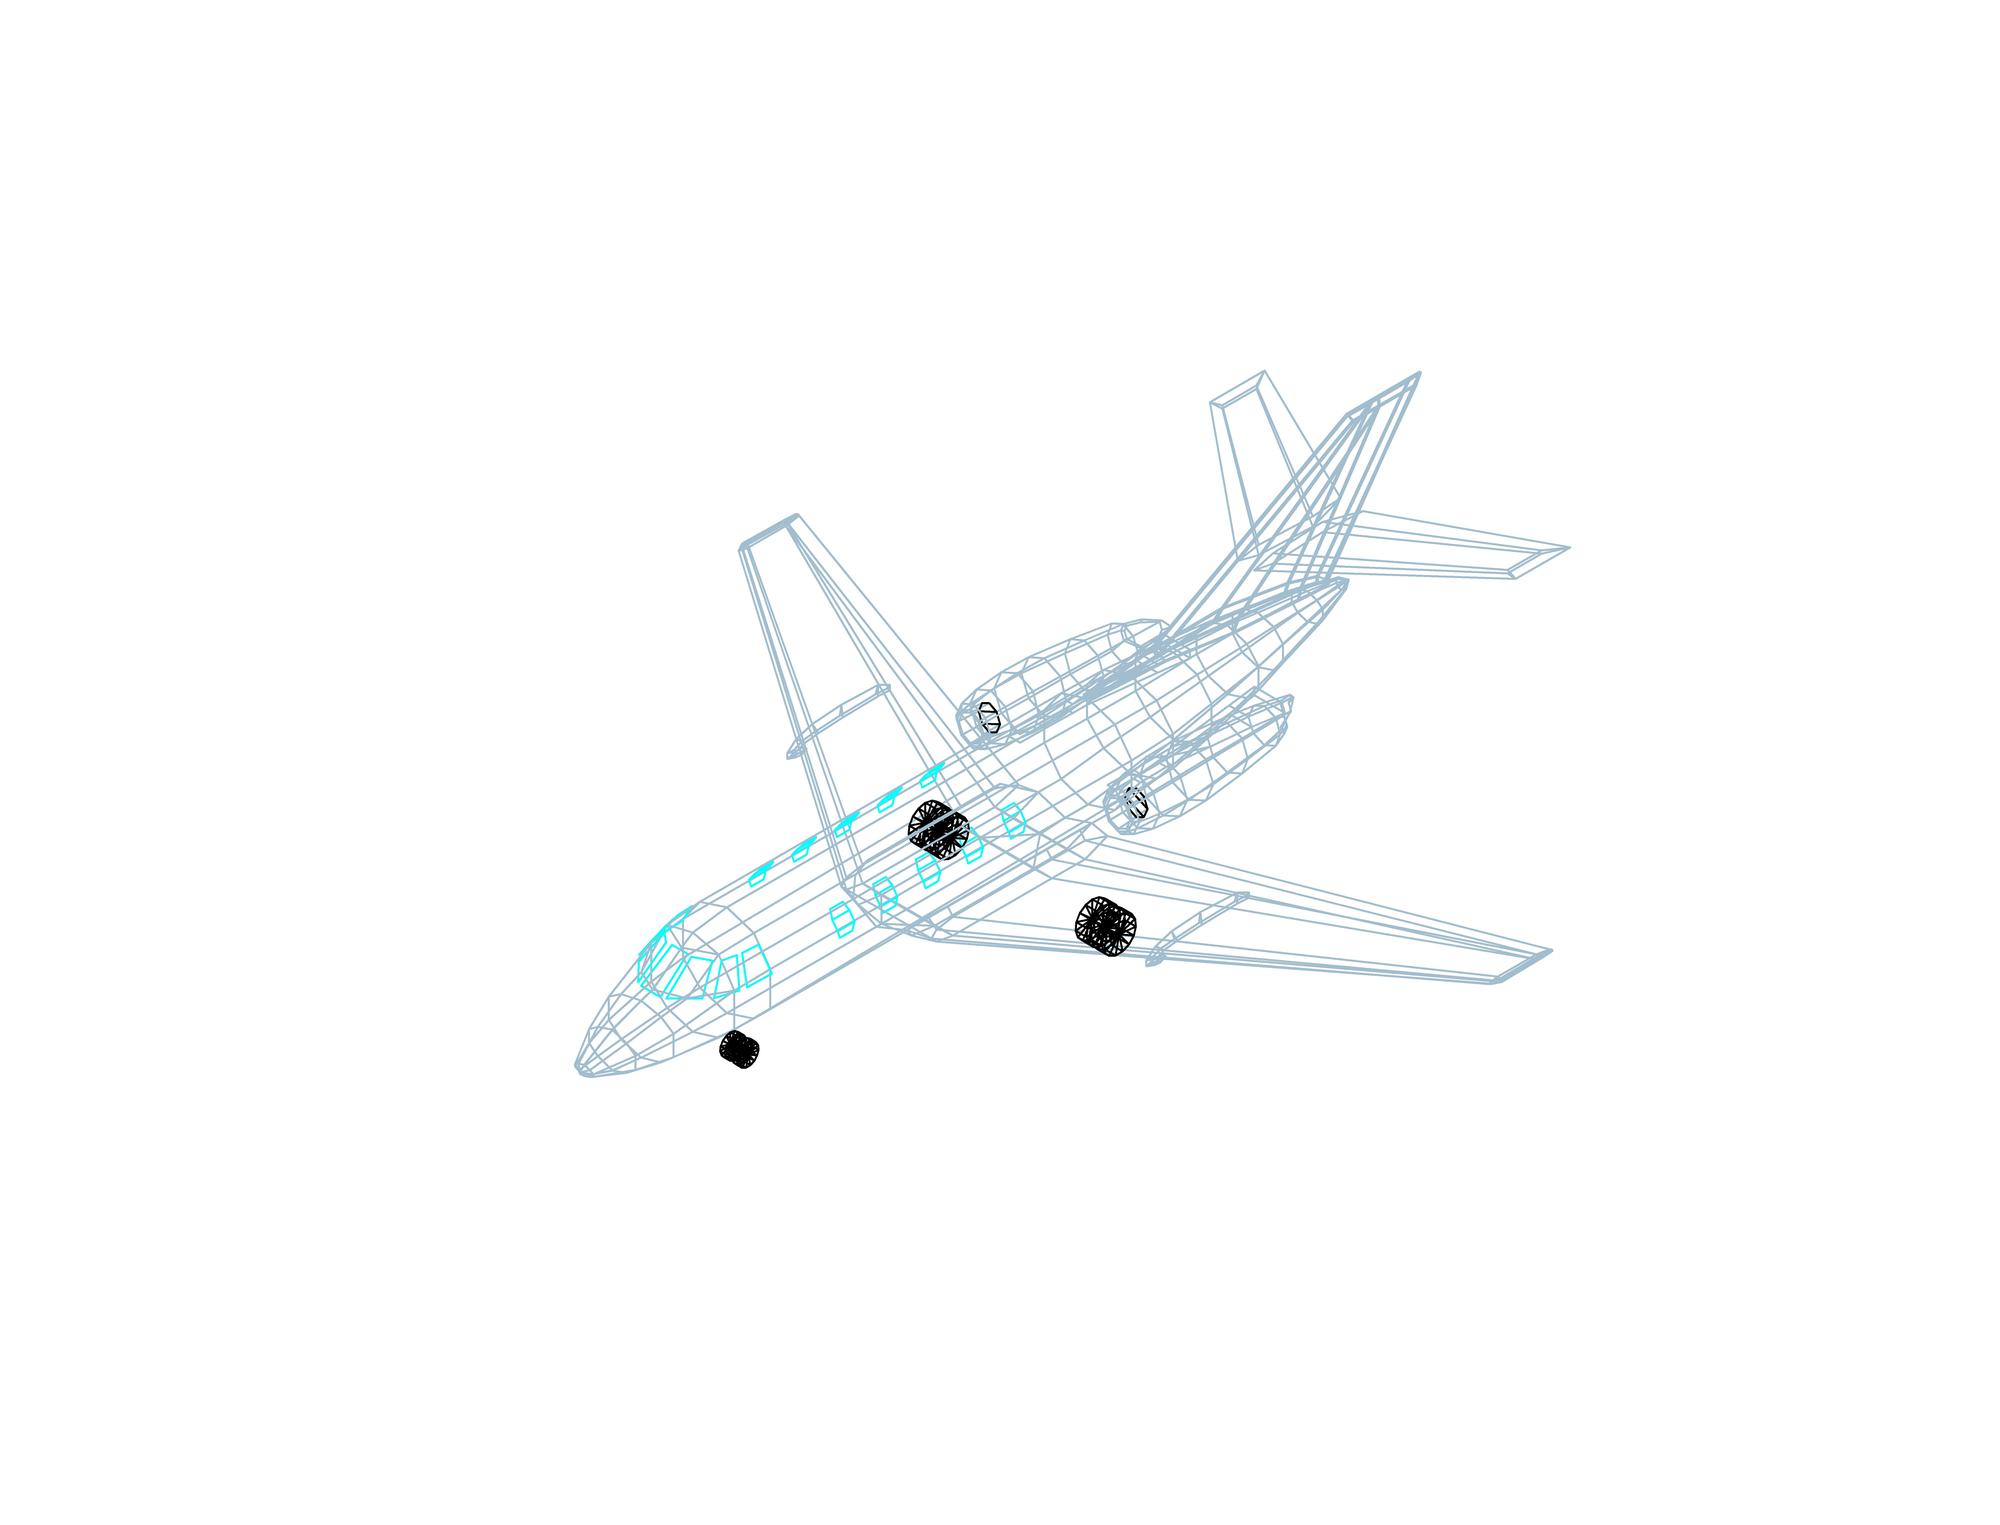 Airplane 9 3D dwg